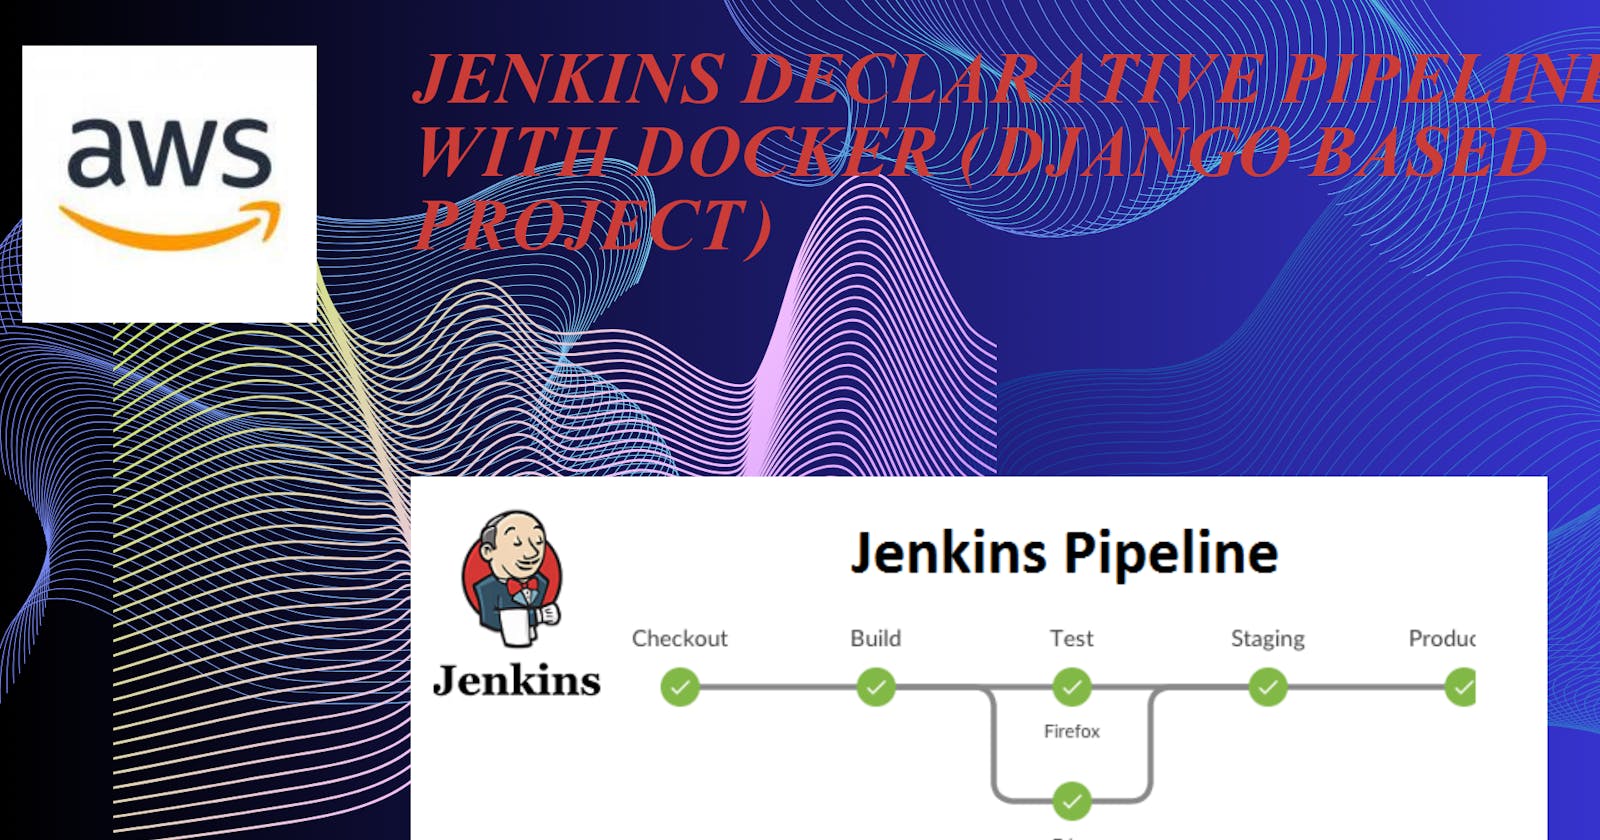 Jenkins Declarative Pipeline with Docker (Django Based Project)